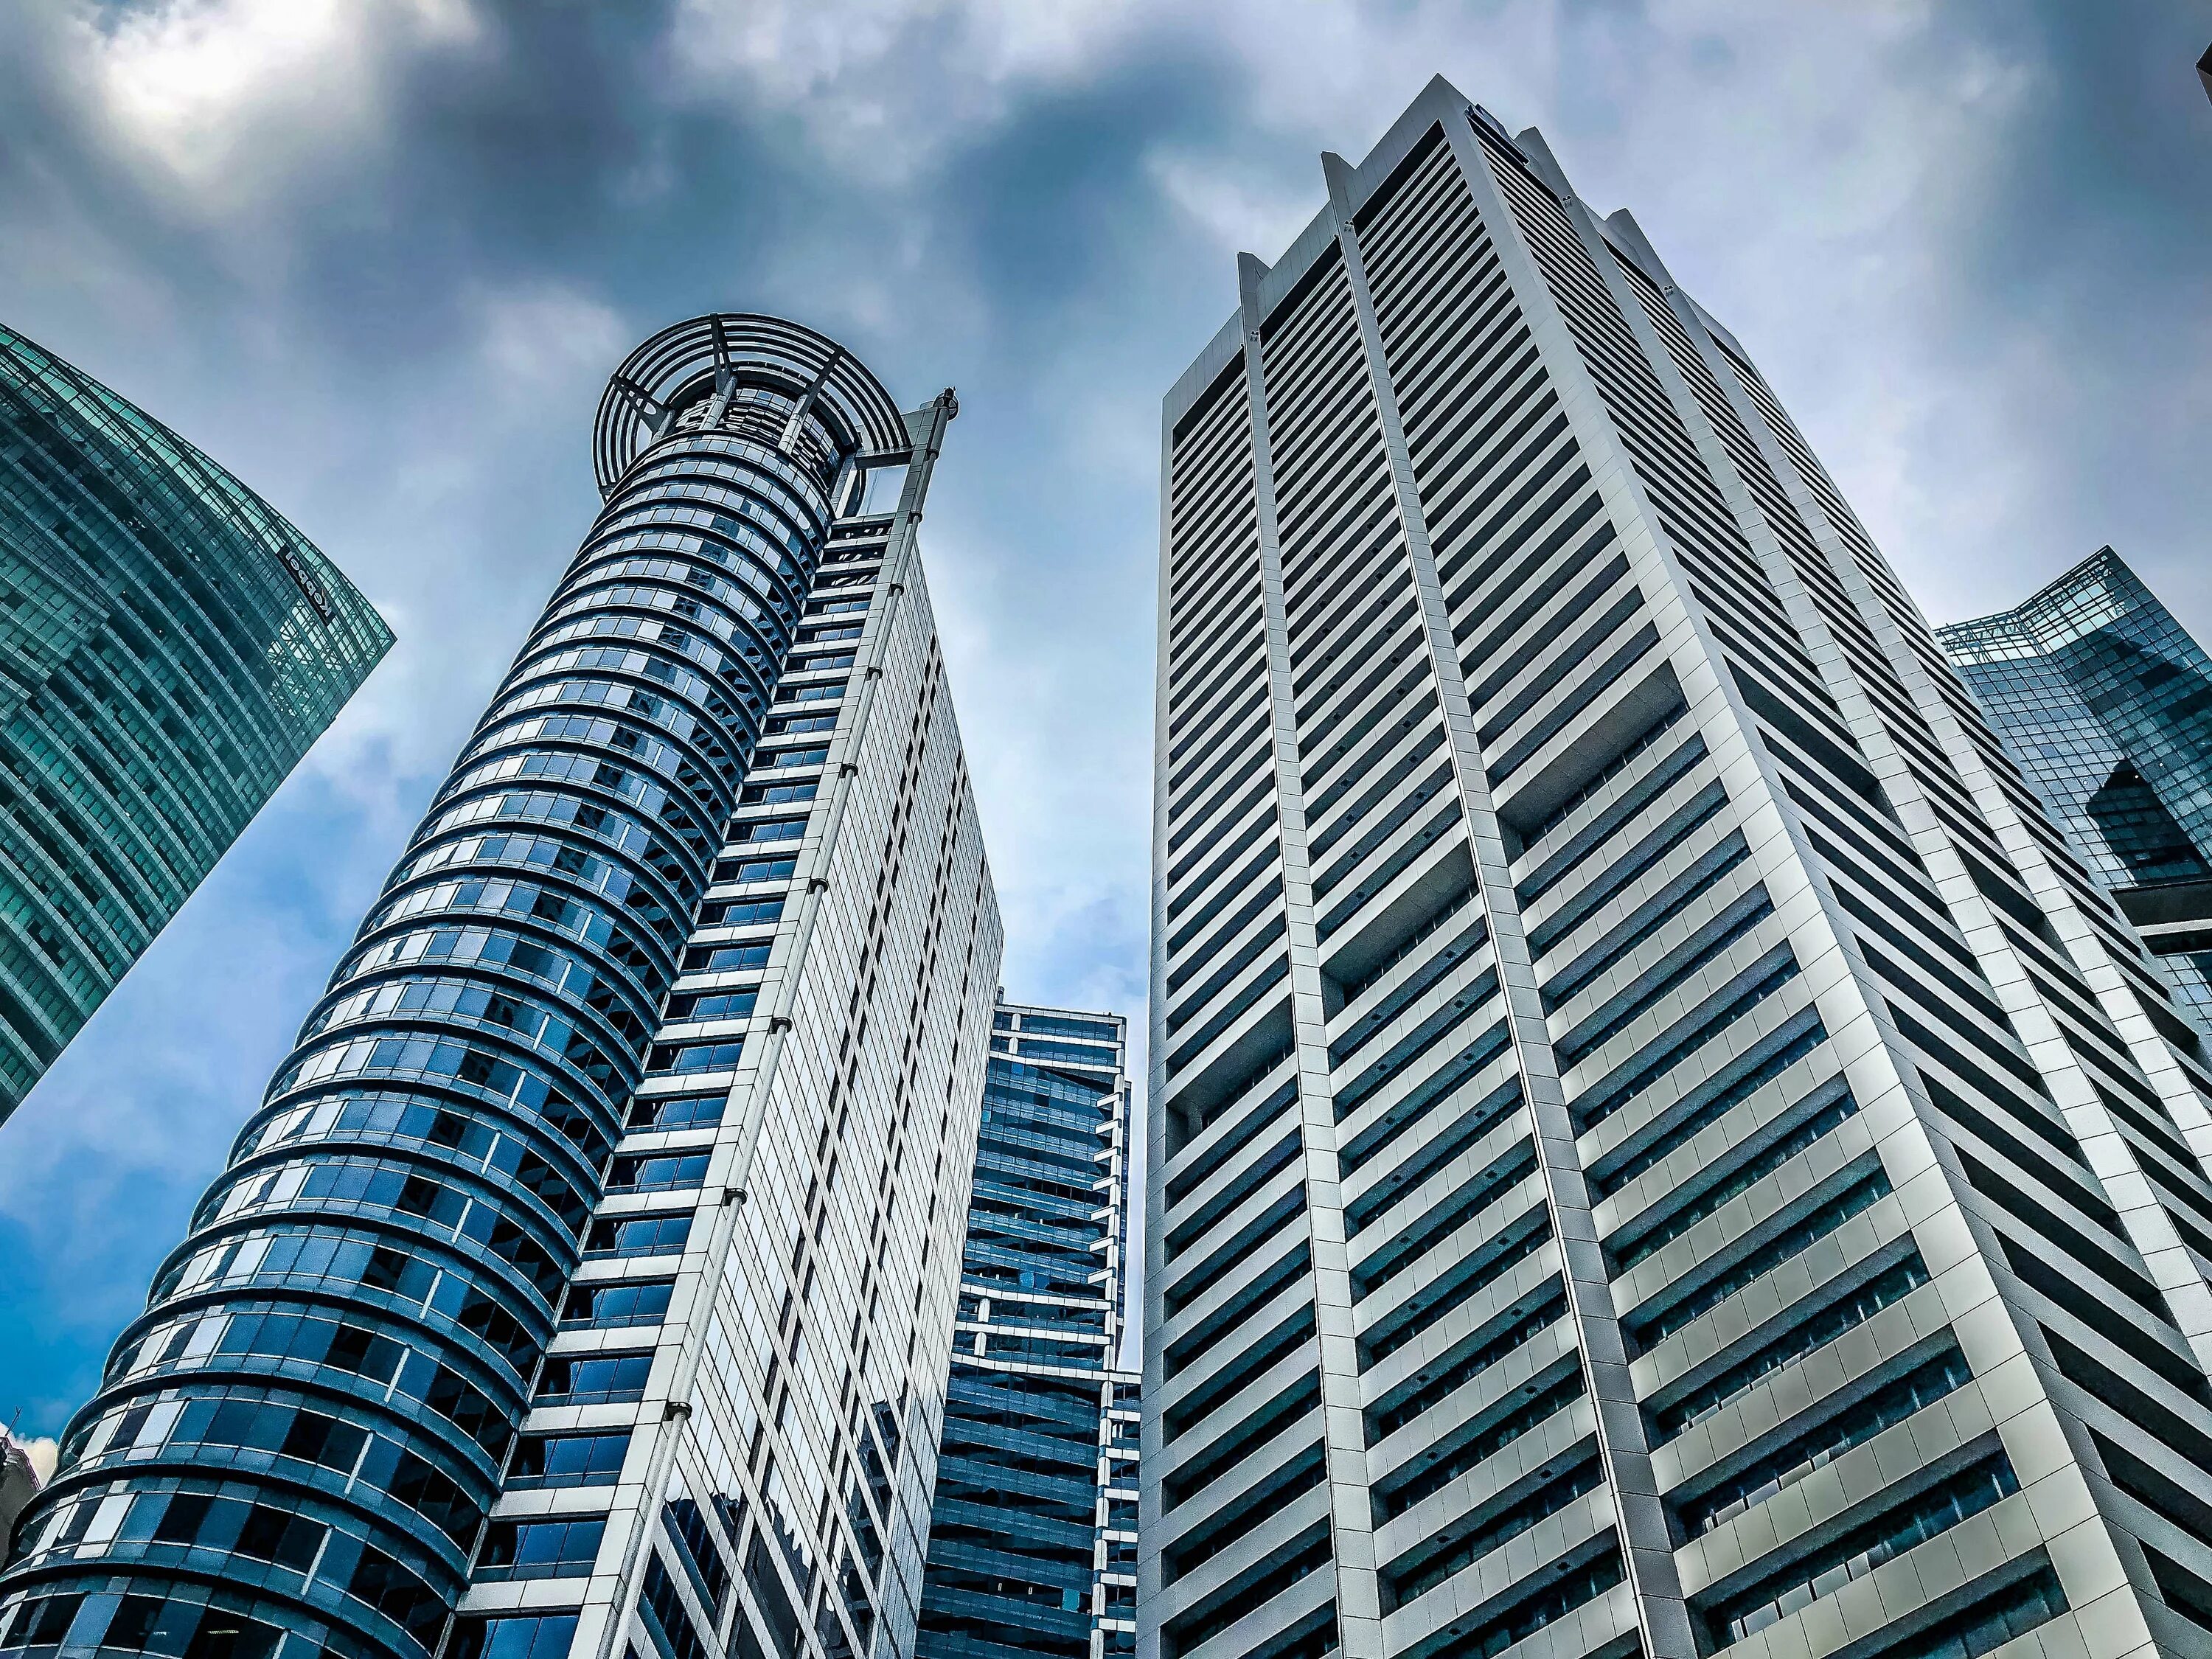 Building better. Высотное городское здание Сингапур. Singapur High-Rise buildings. Картинка дом высотка. High building.